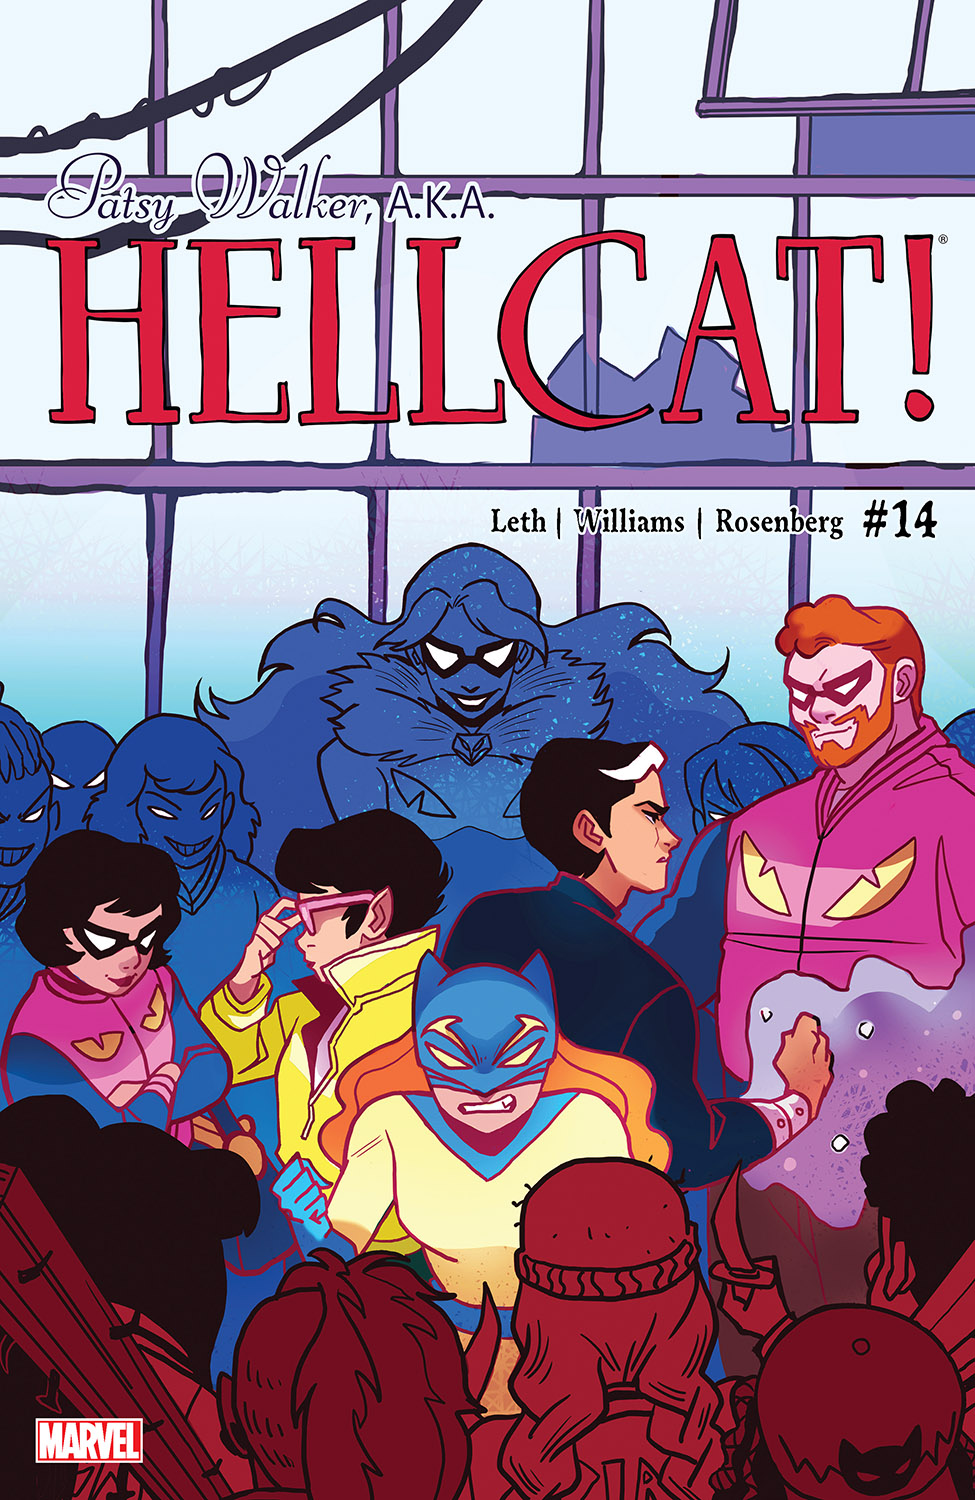 Patsy Walker, a.K.a. Hellcat! (2015) #14